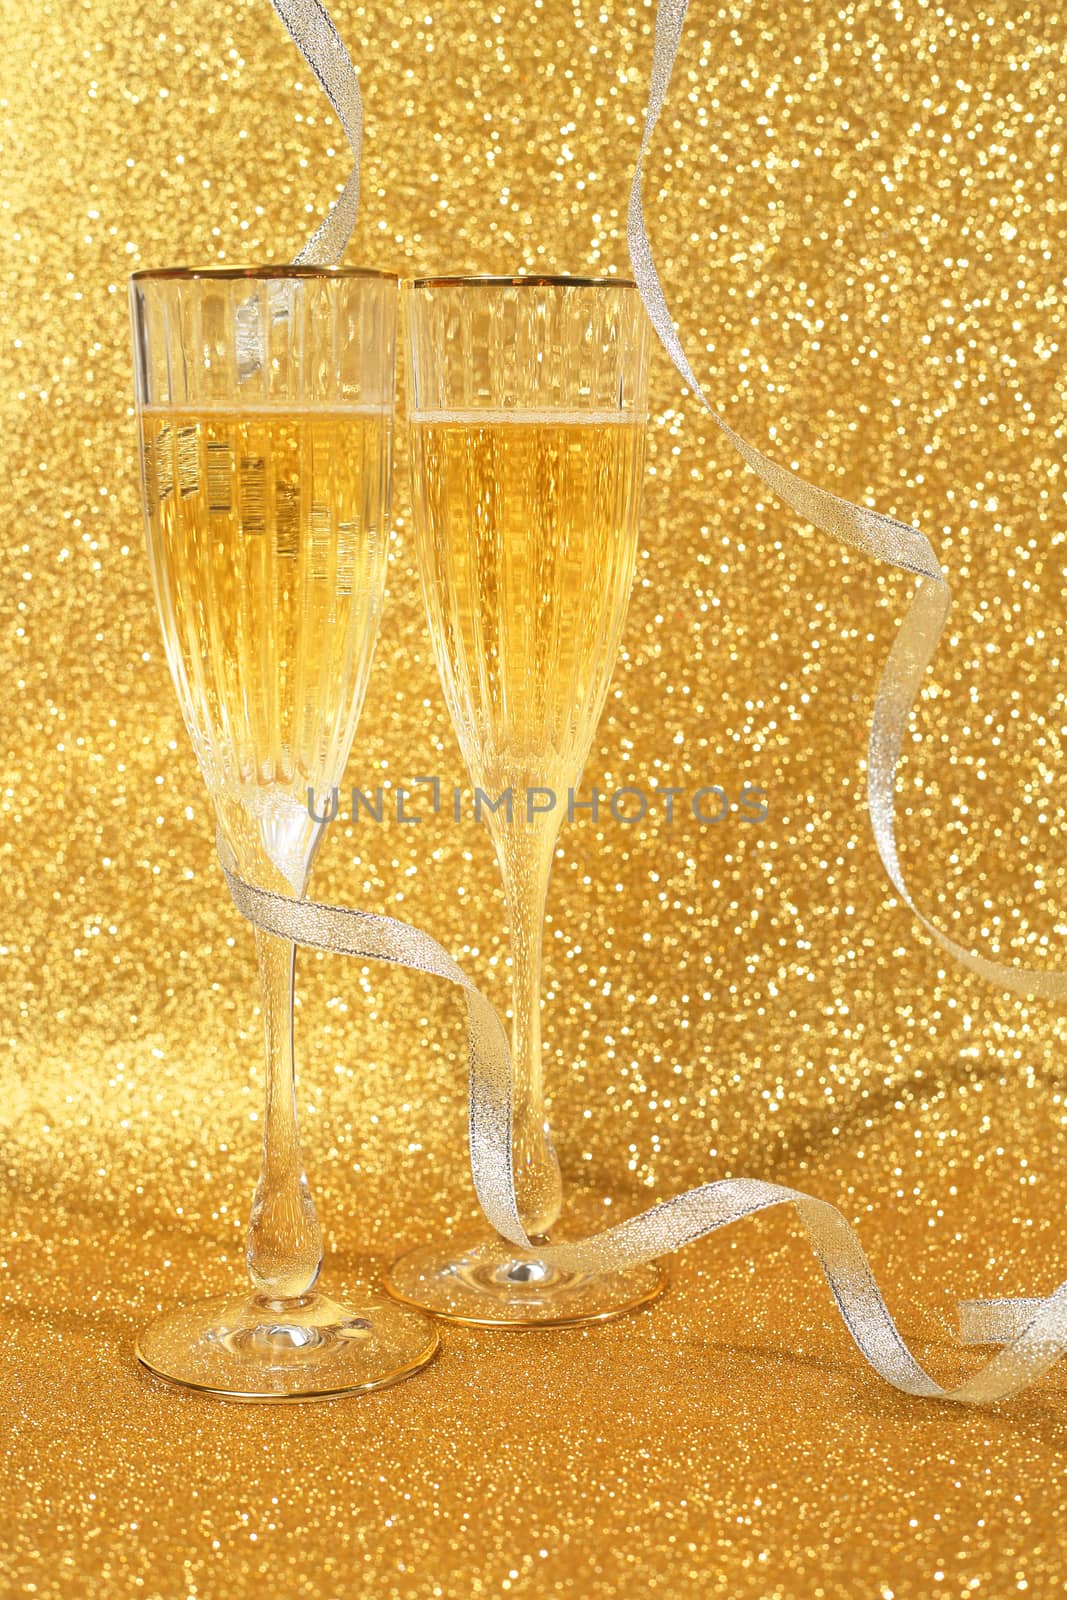 Glasses of champagne  by destillat